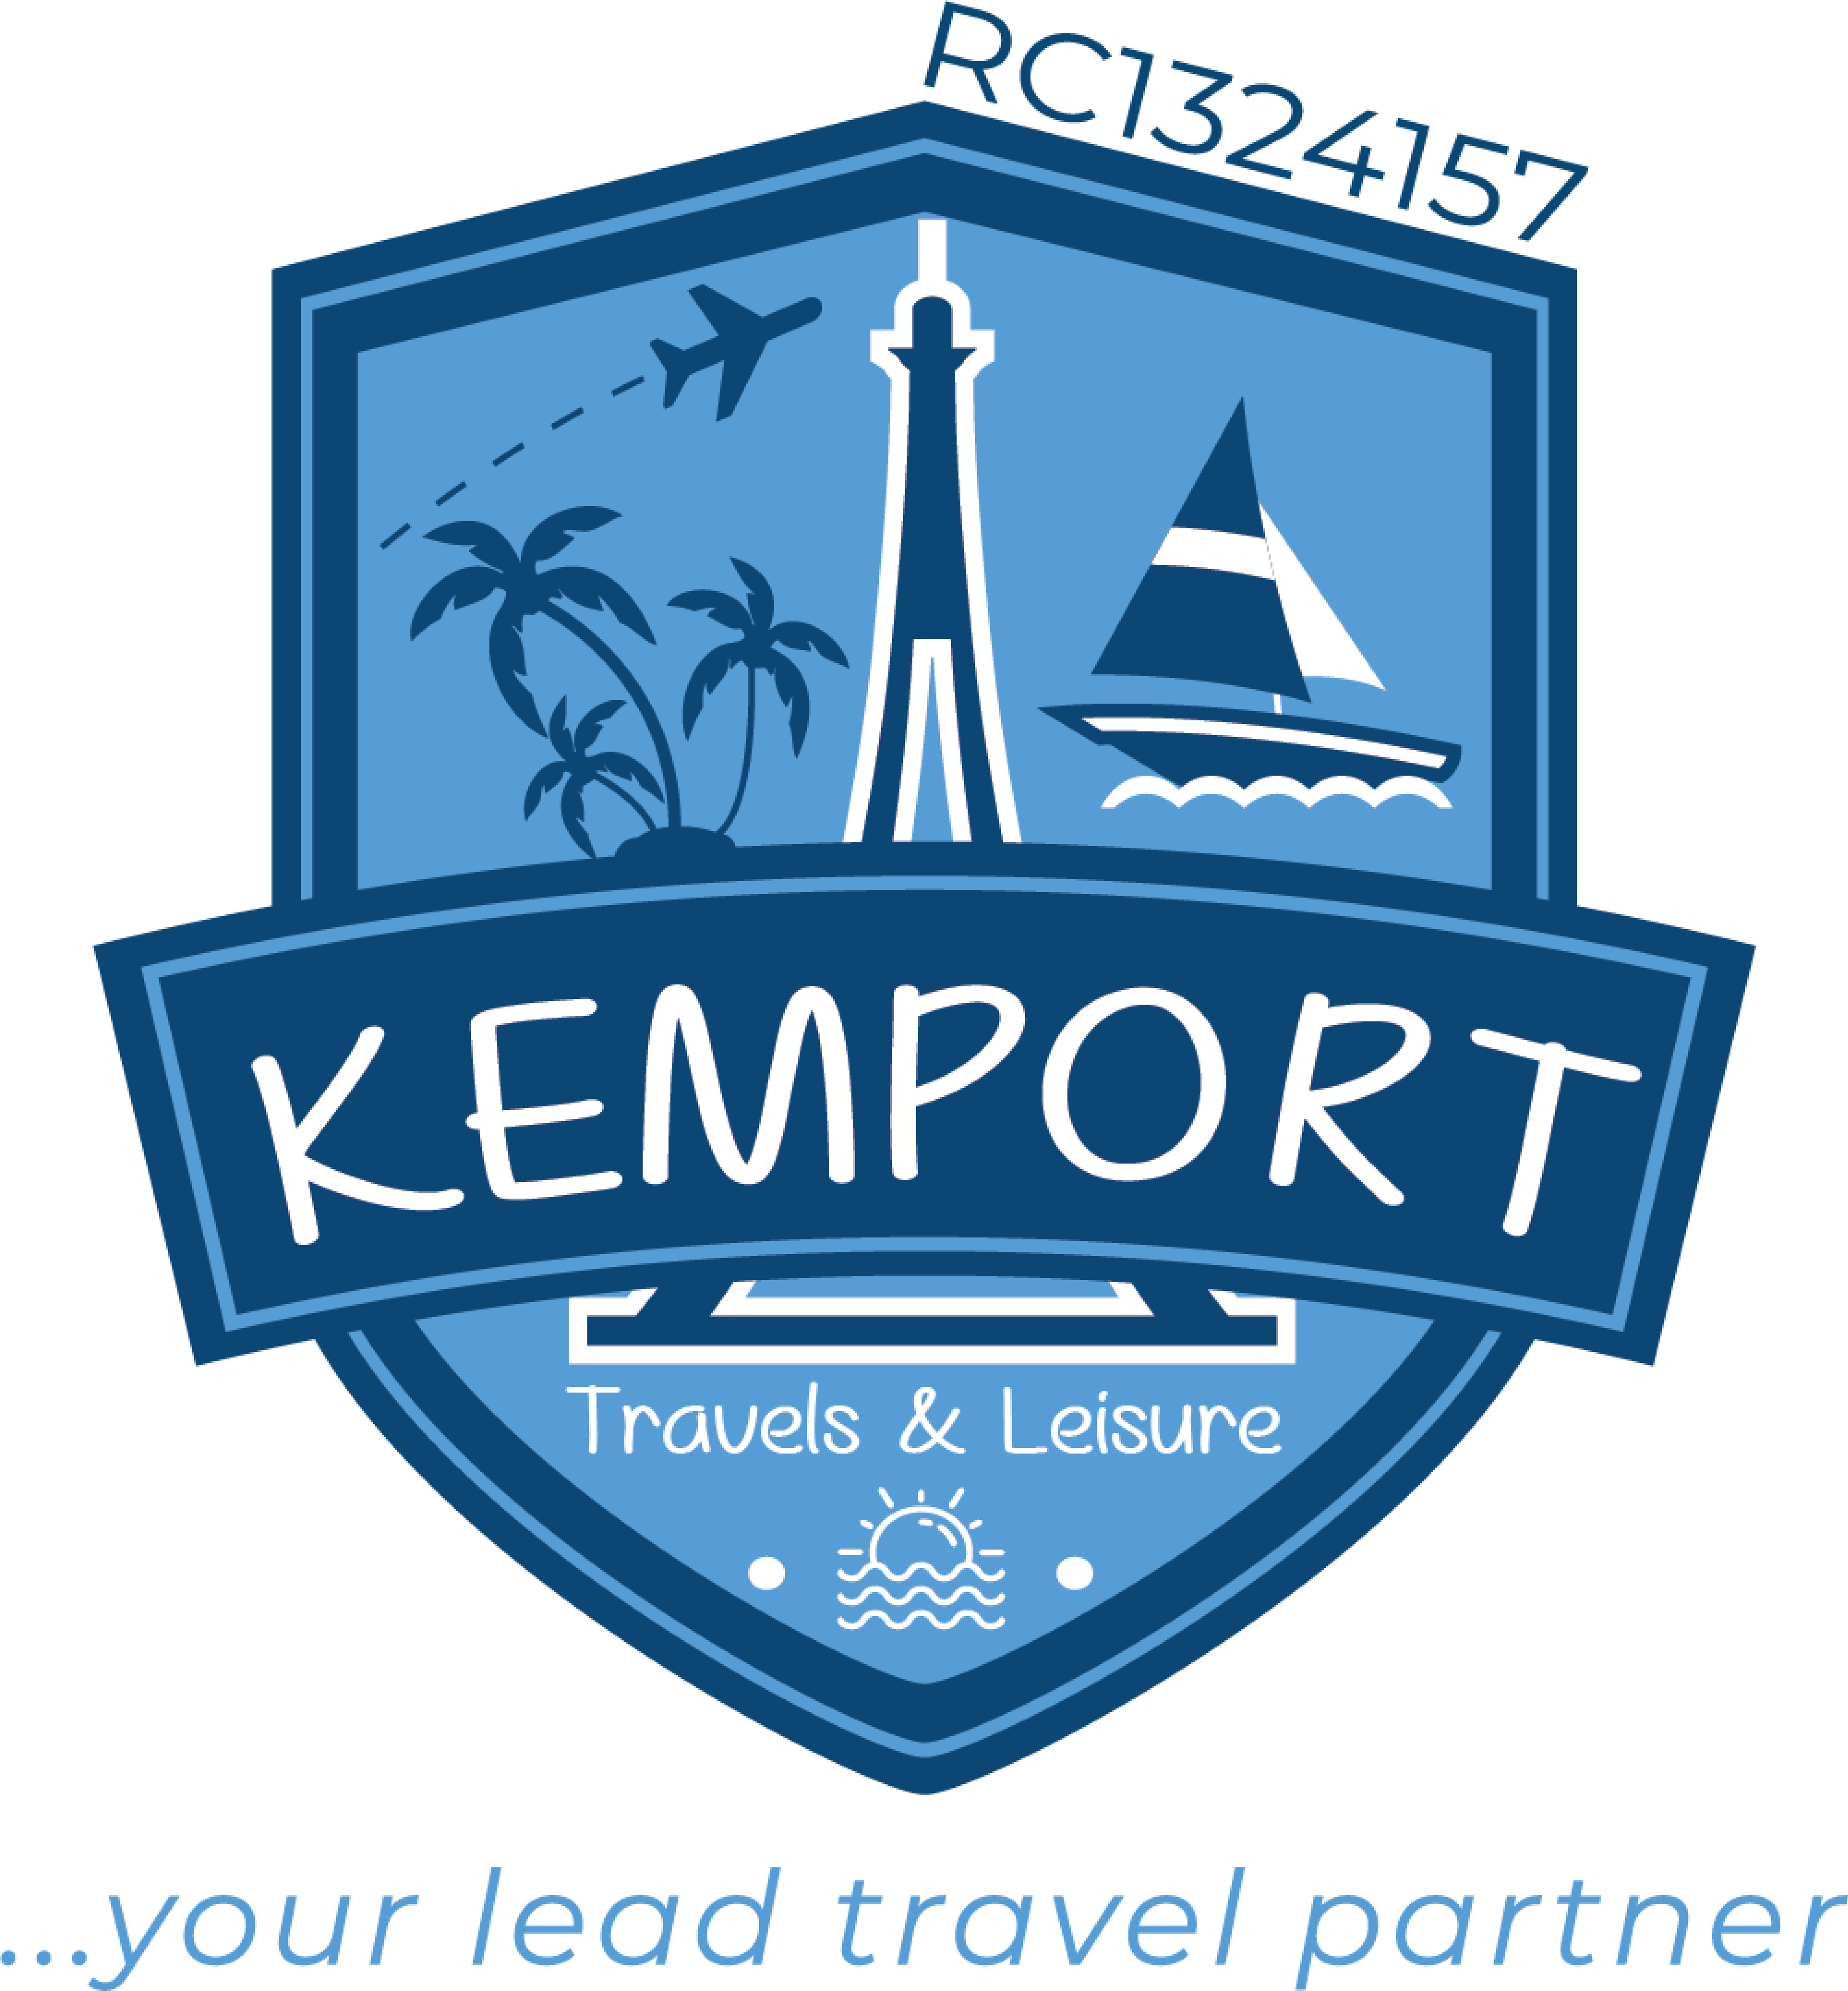 Kemport Travel